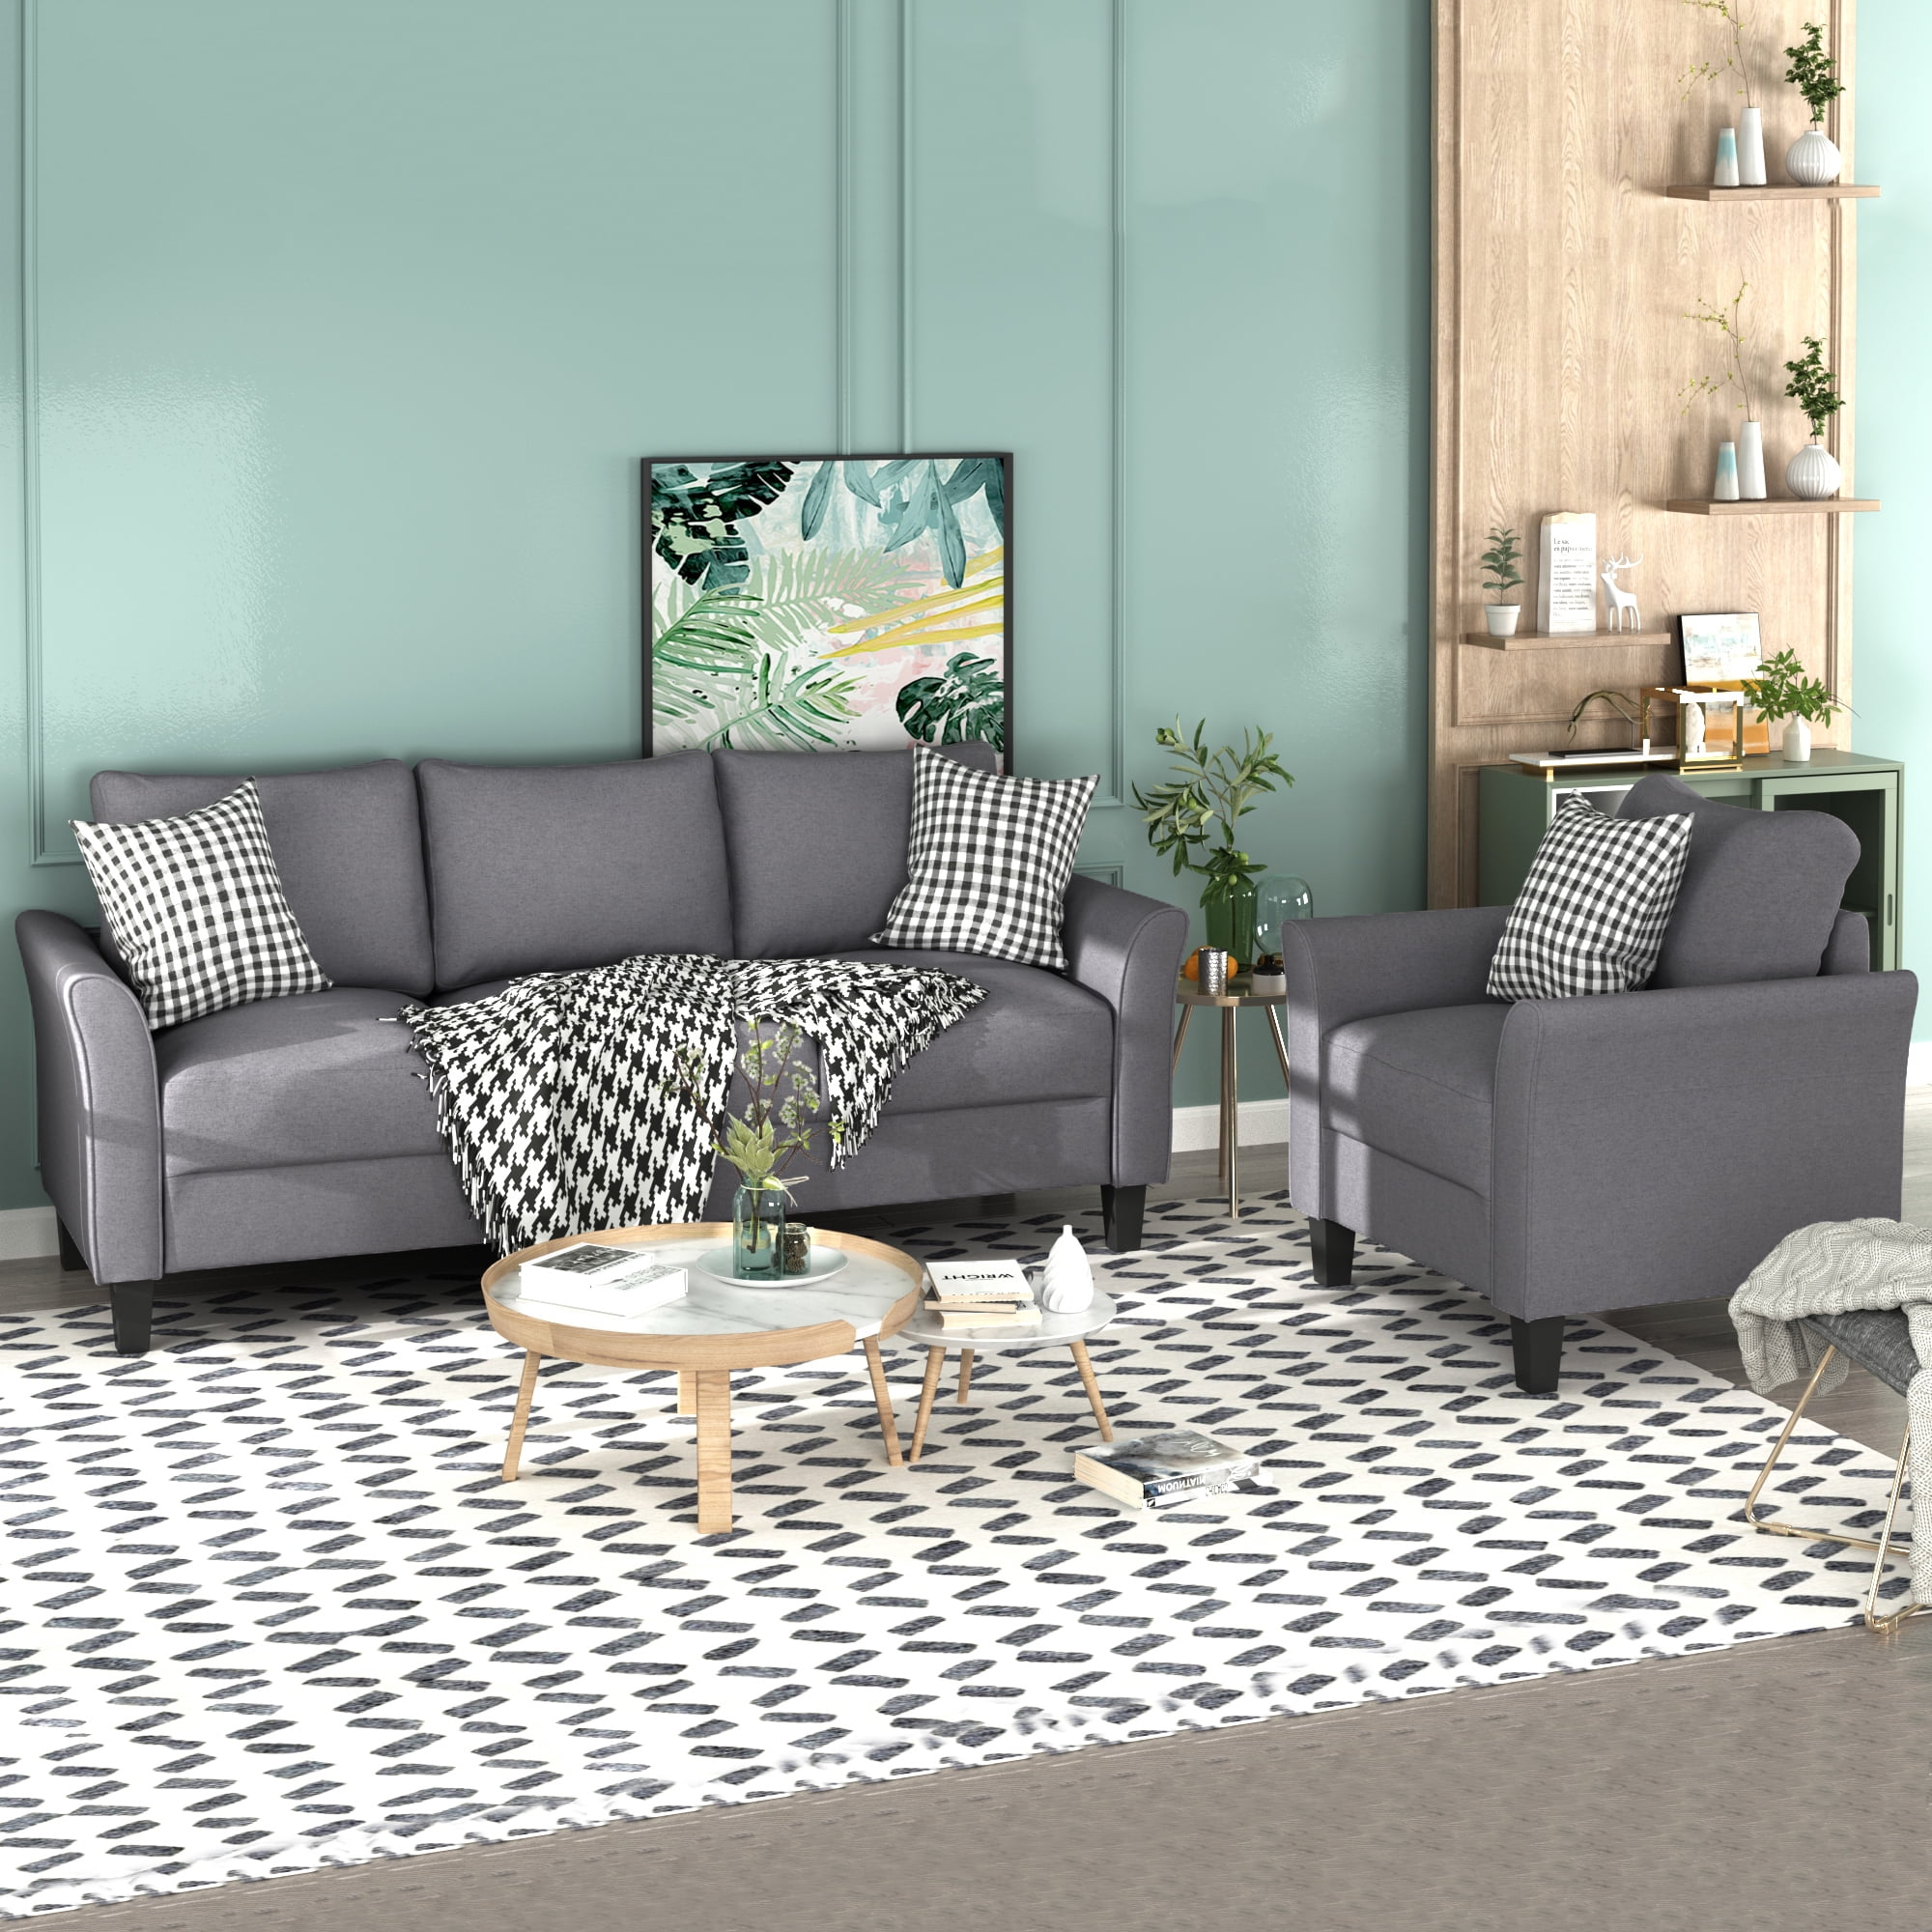 Minimalist Contemporary Living Room Furniture for Simple Design